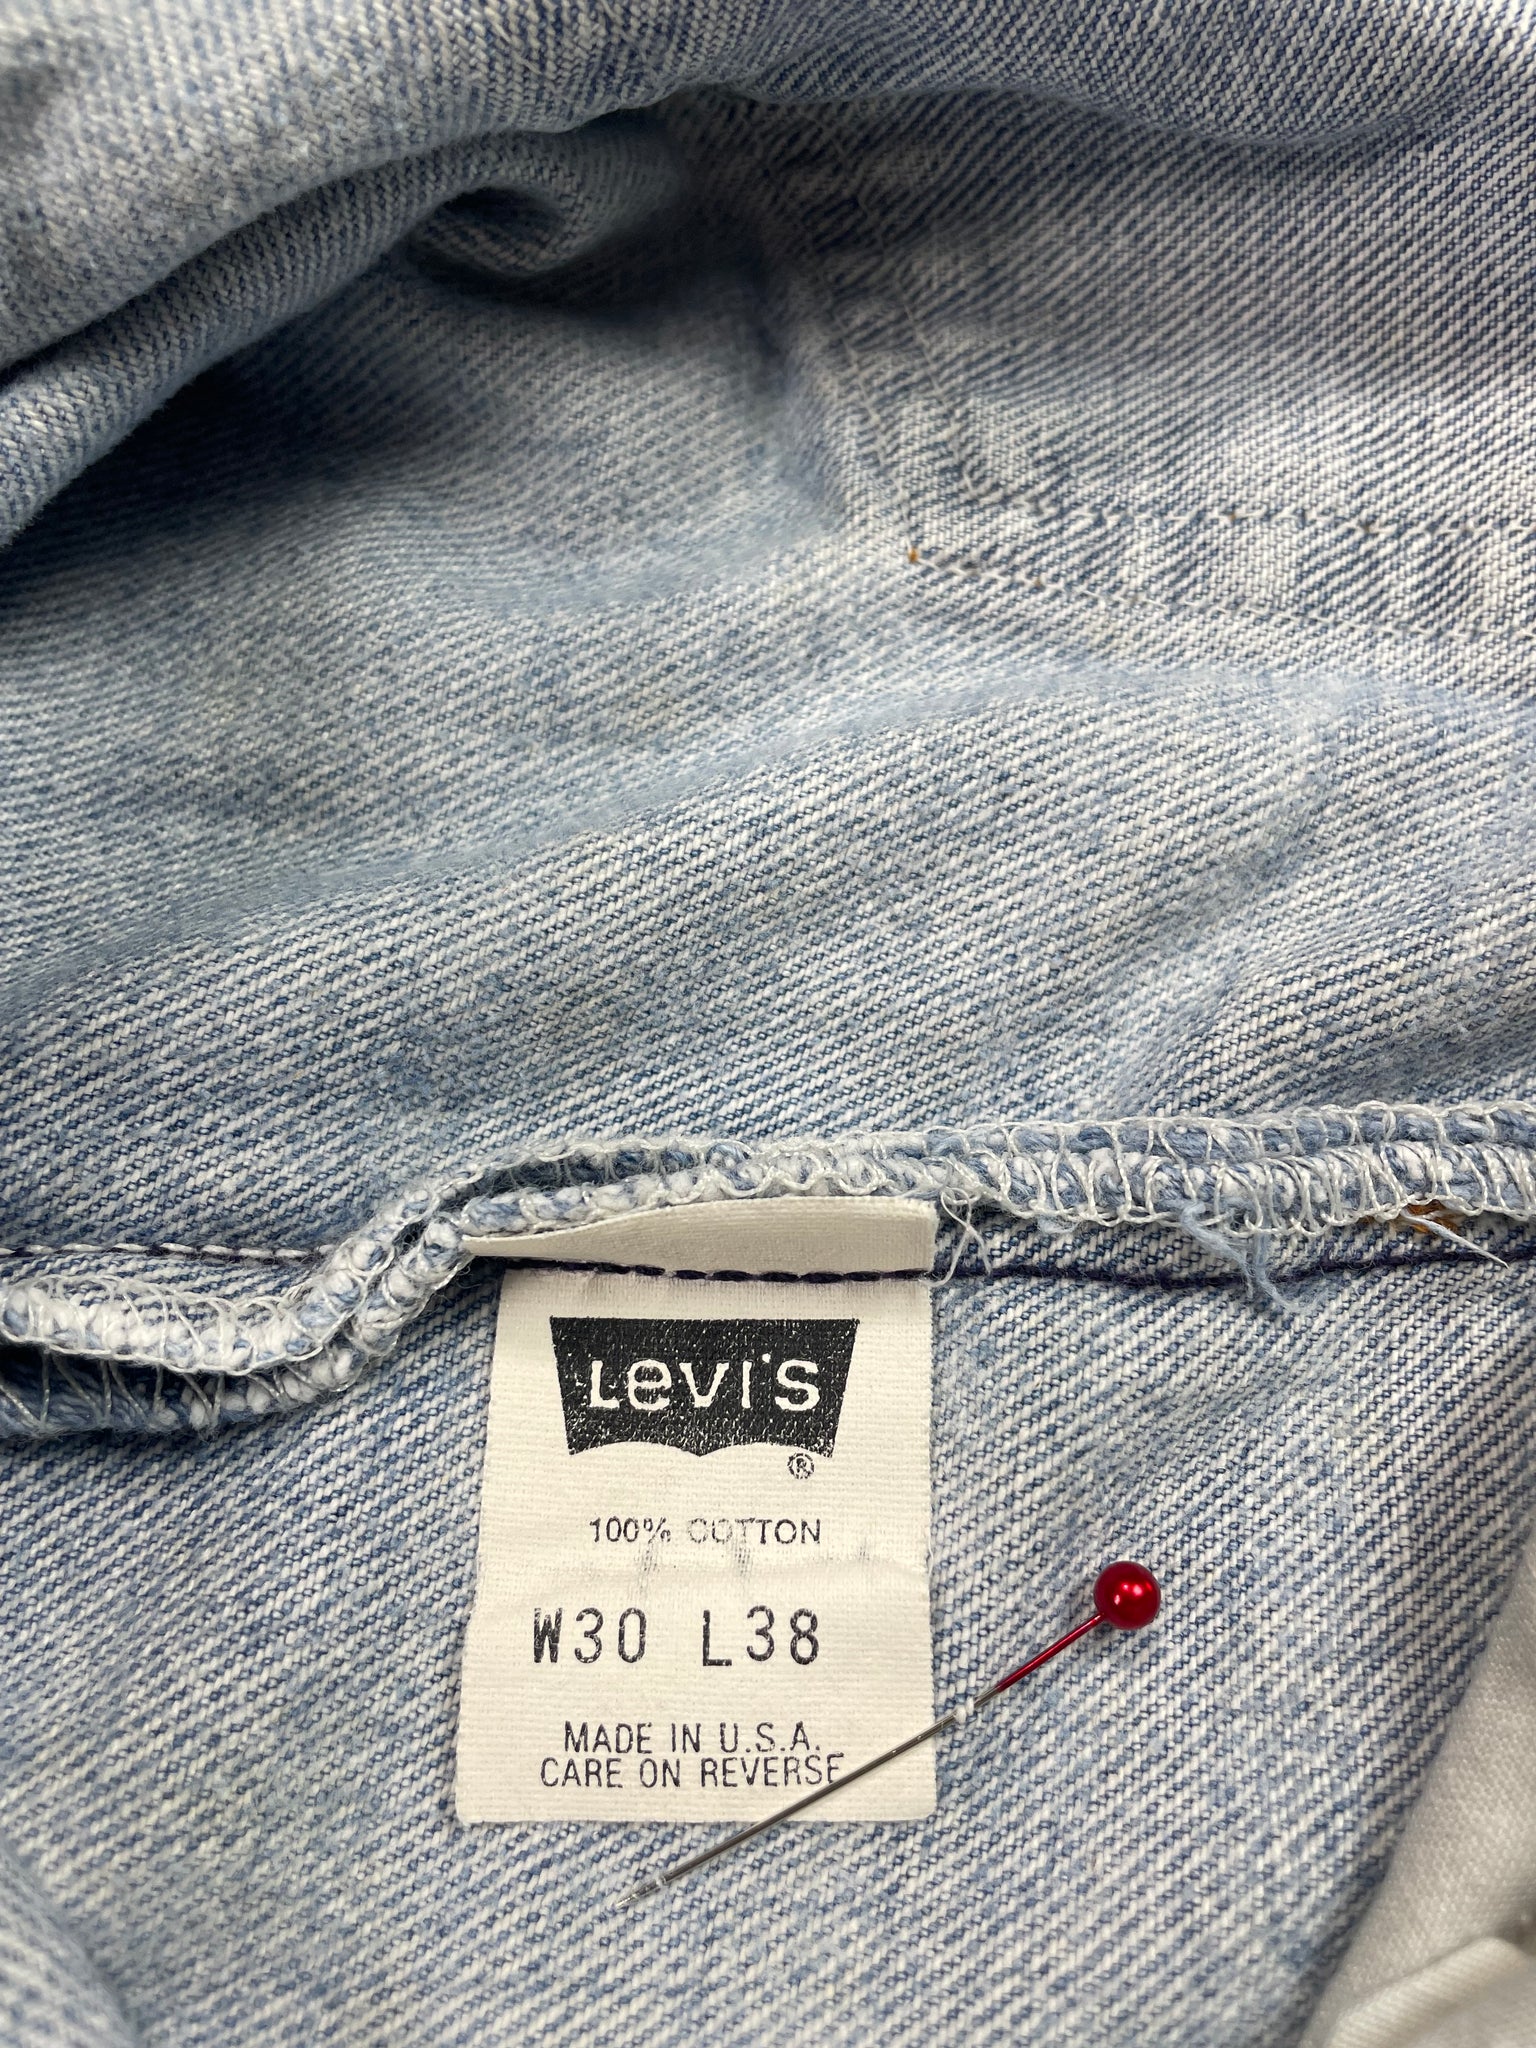 Vintage Levi 501 USA Premium Super Feather Denim Jeans (JYJ-0263)